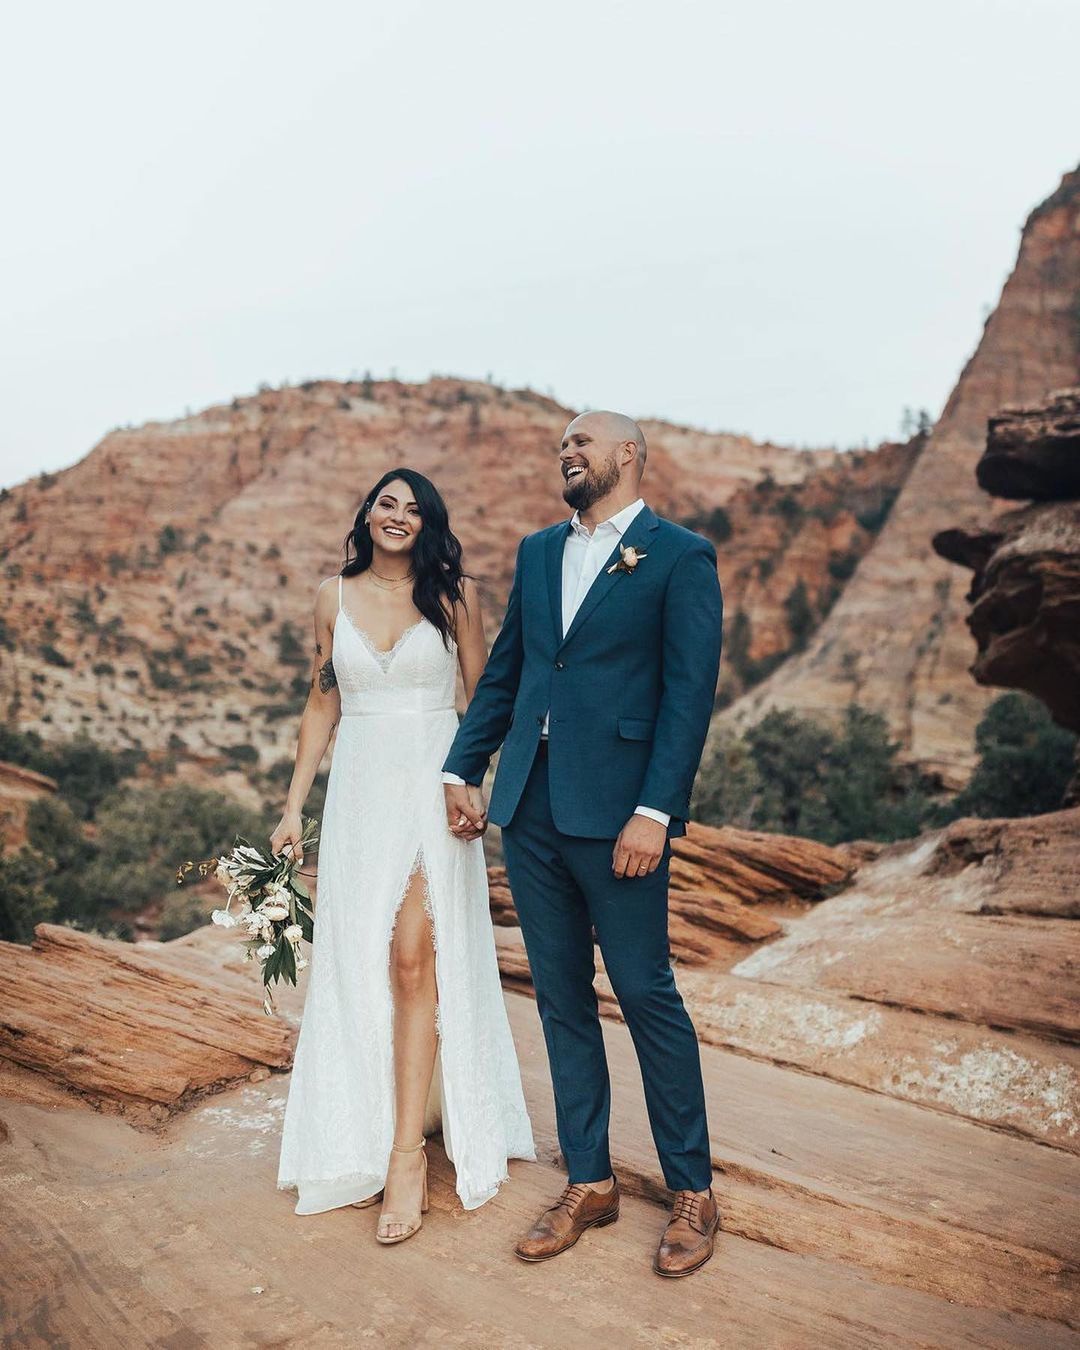 The Best Mountain Wedding Dresses